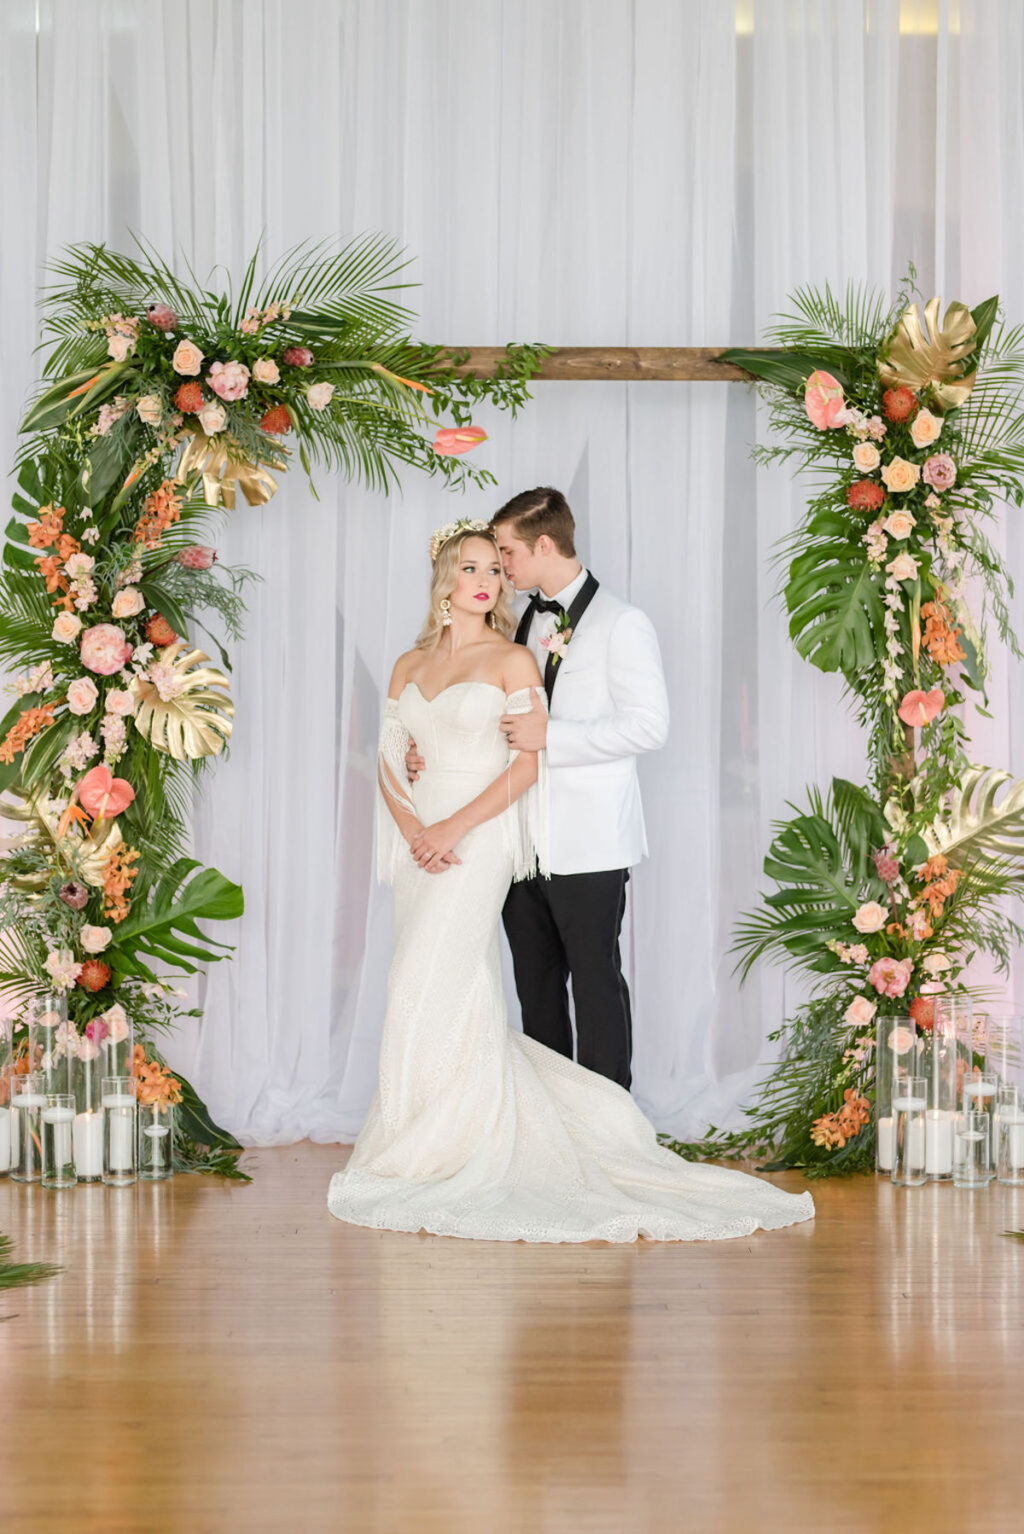 EventFull Weddings | Tampa Bay Wedding Planner